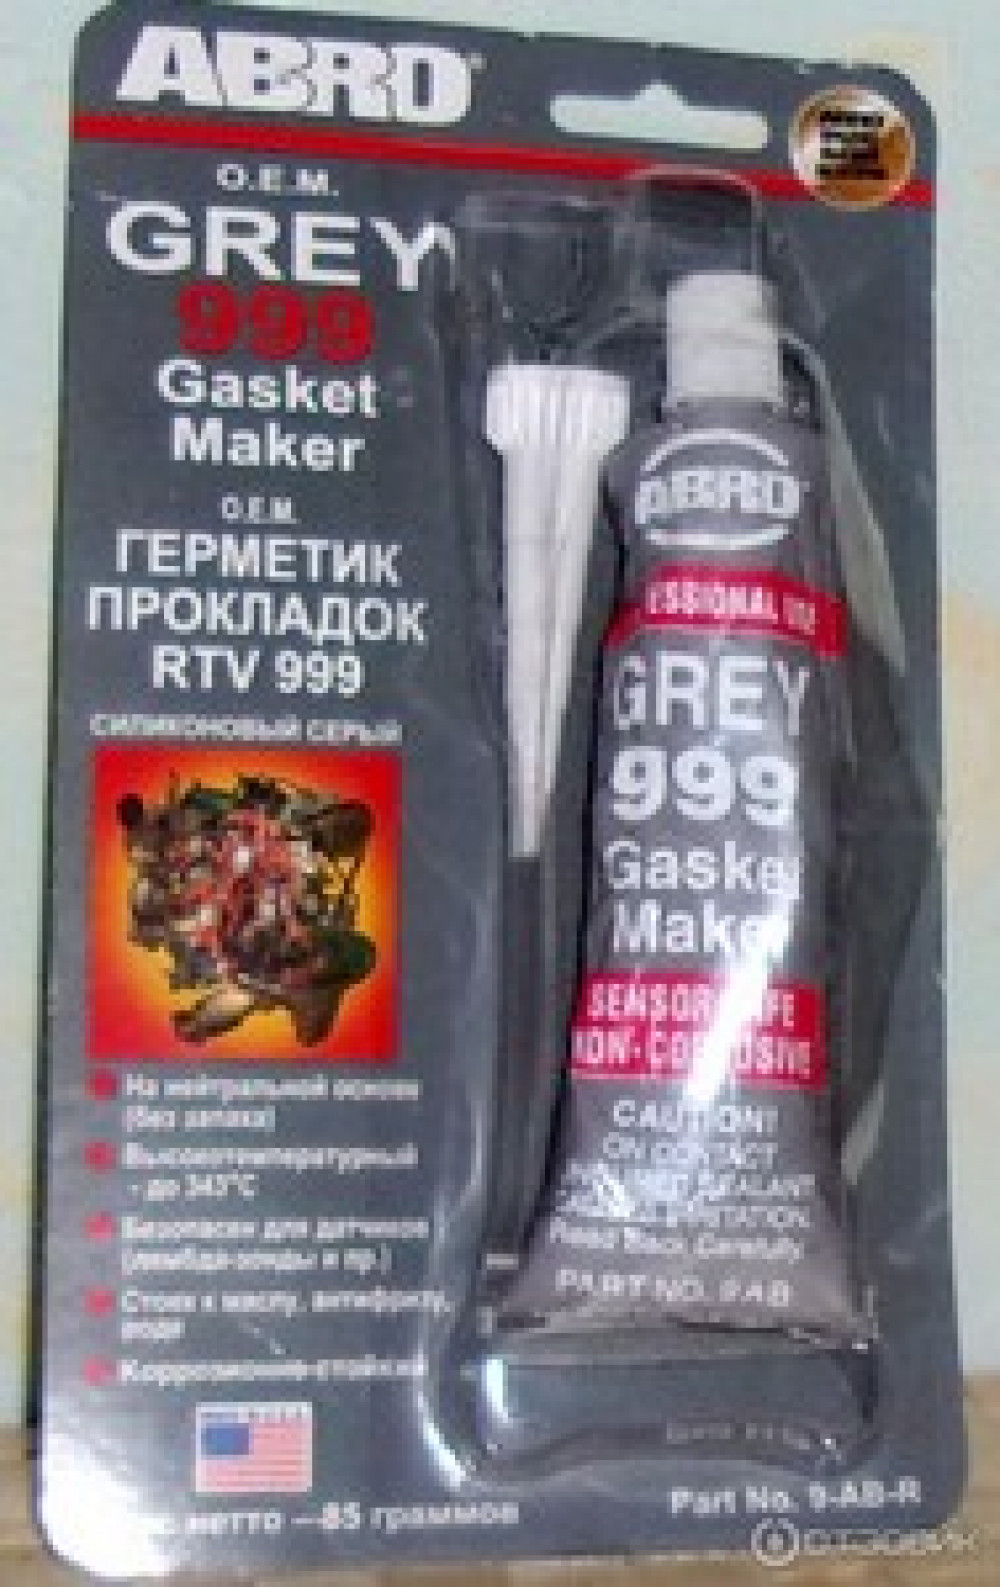 Какой герметик для прокладки. Герметик-прокладка серый abro 999. Герметик прокладок abro Grey 999 (85гр) 9ab. Герметик-прокладка серый (42гр) "abro". Герметик Абро 999 серый.